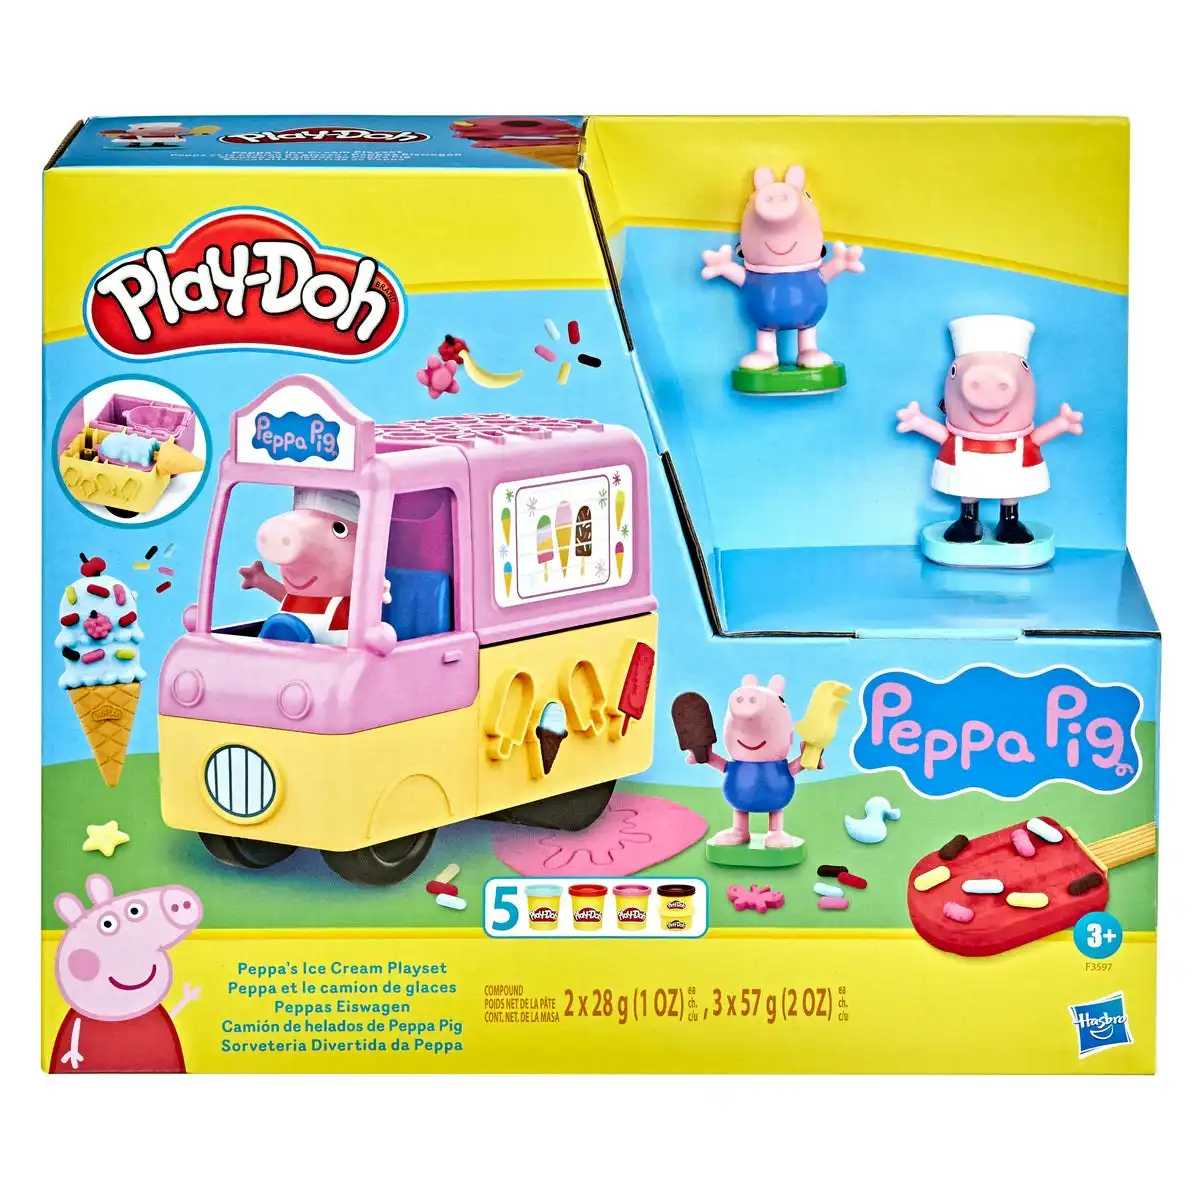 Play-doh - Peppa Pig Peppa's Ice Cream Playset